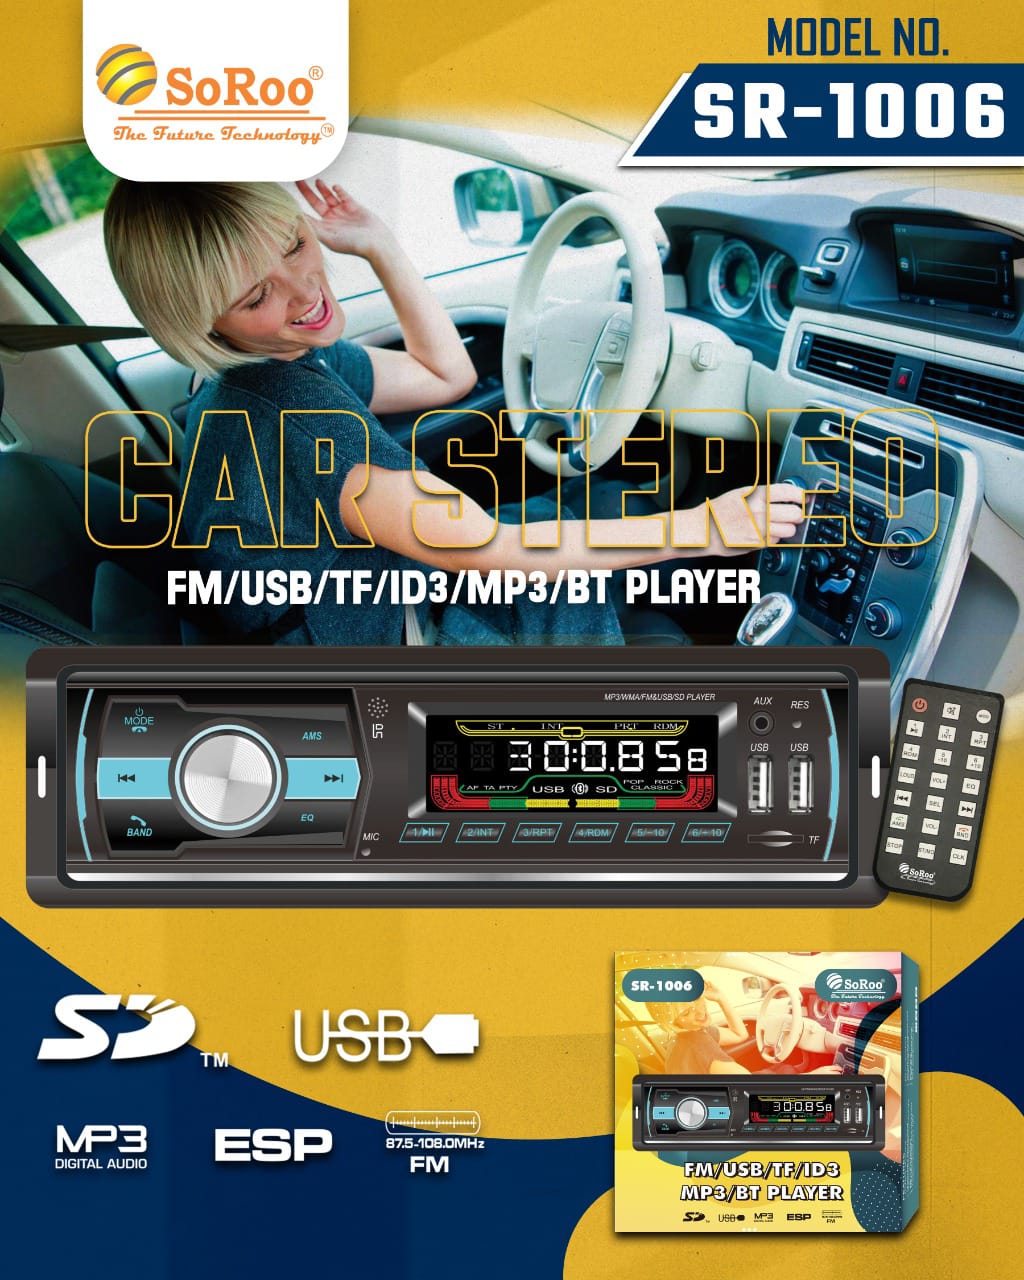 Soroo Car MP3 Player SR-1006